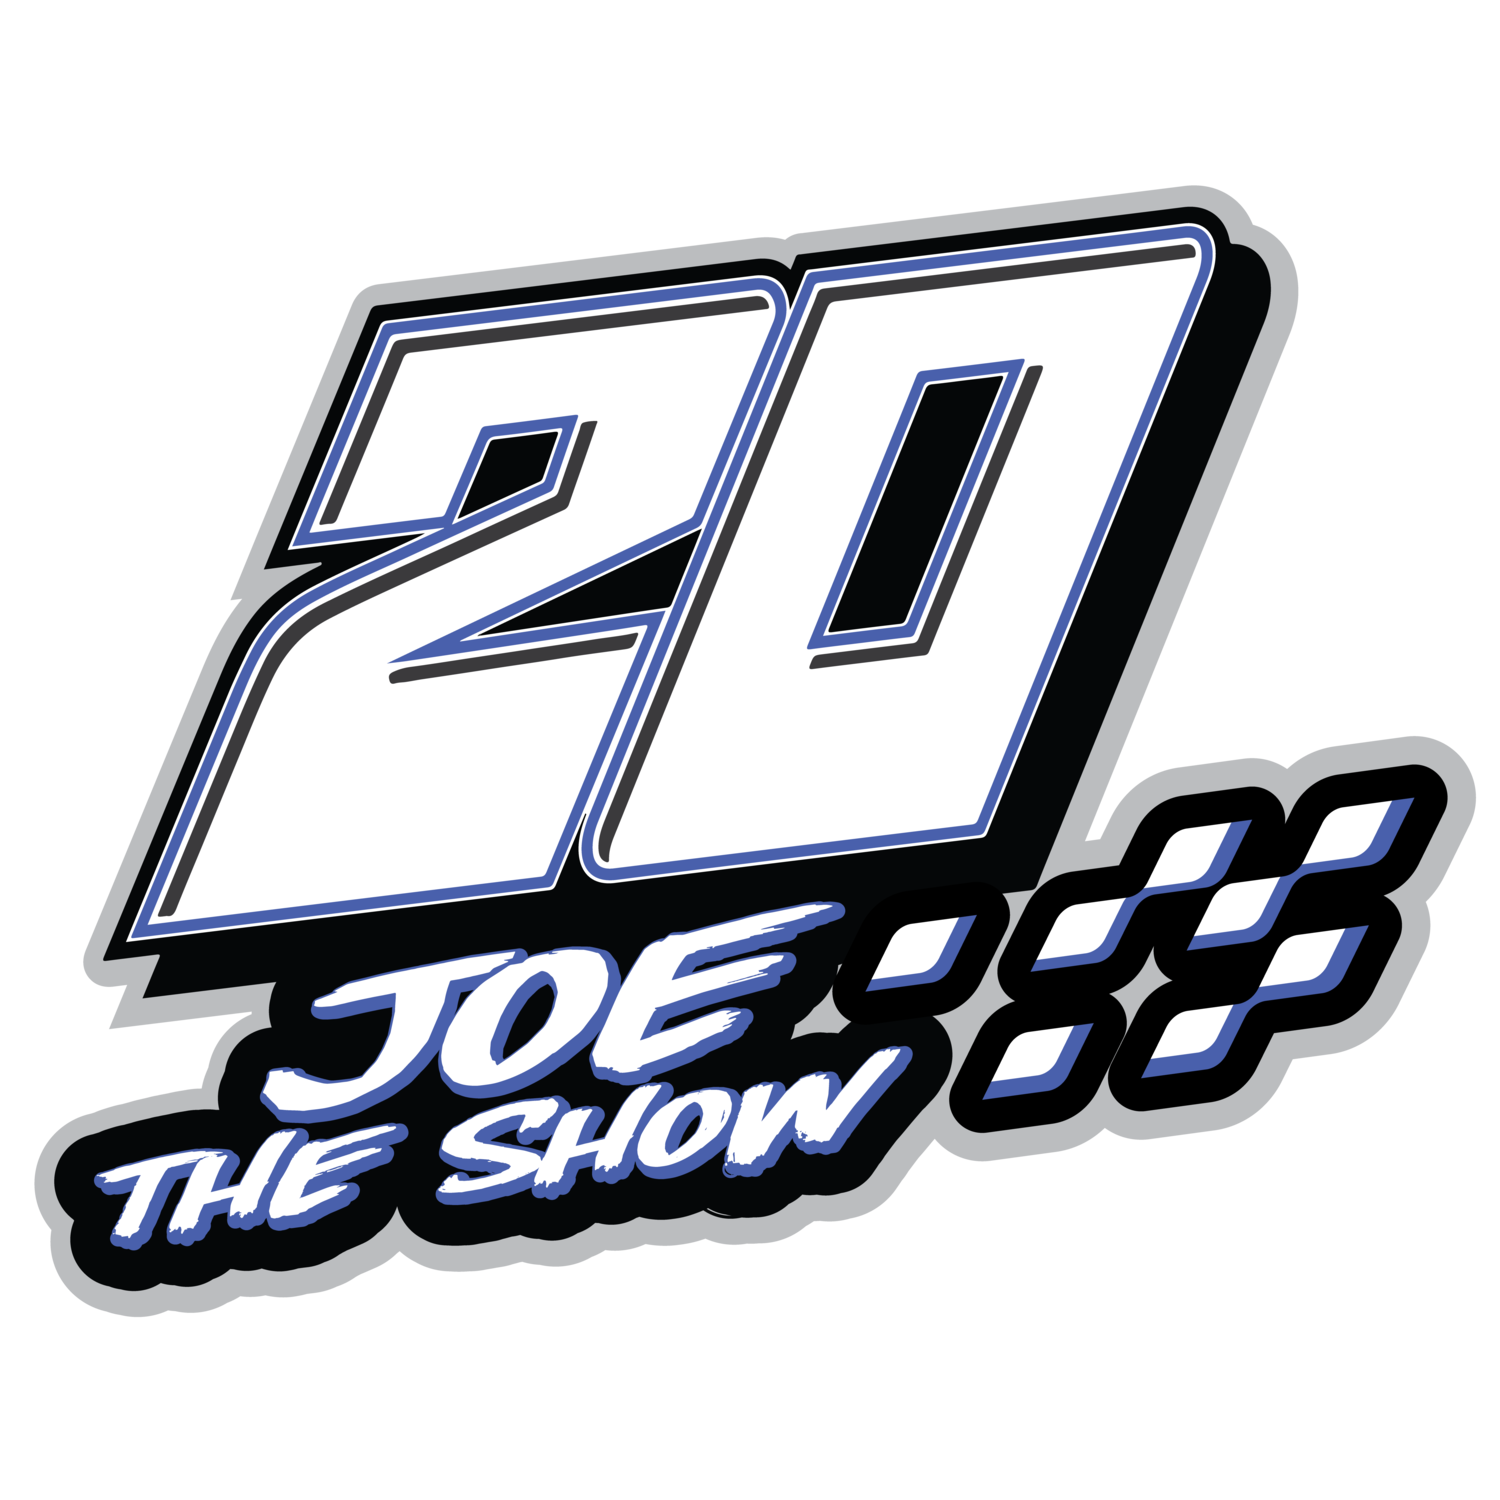 Joe the Show 20